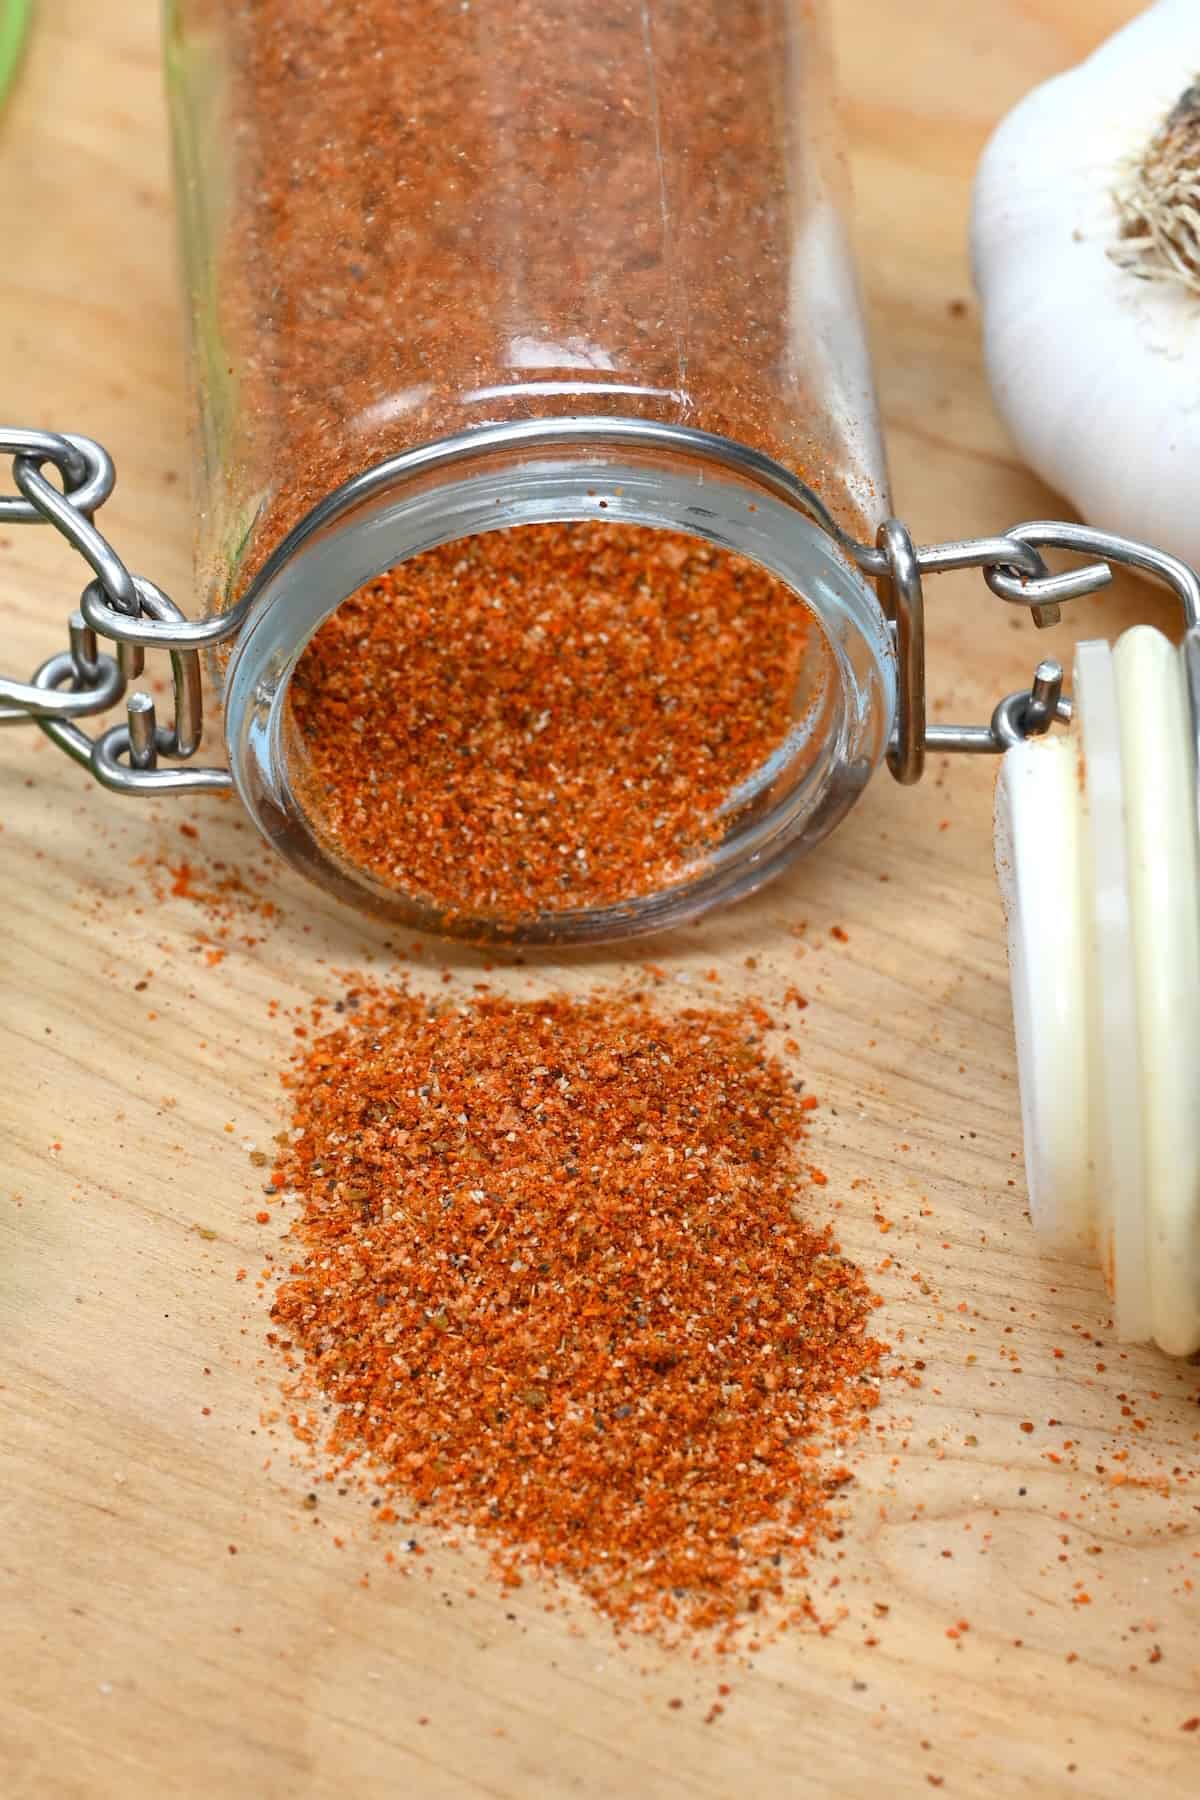 A small jar with chili seasoning